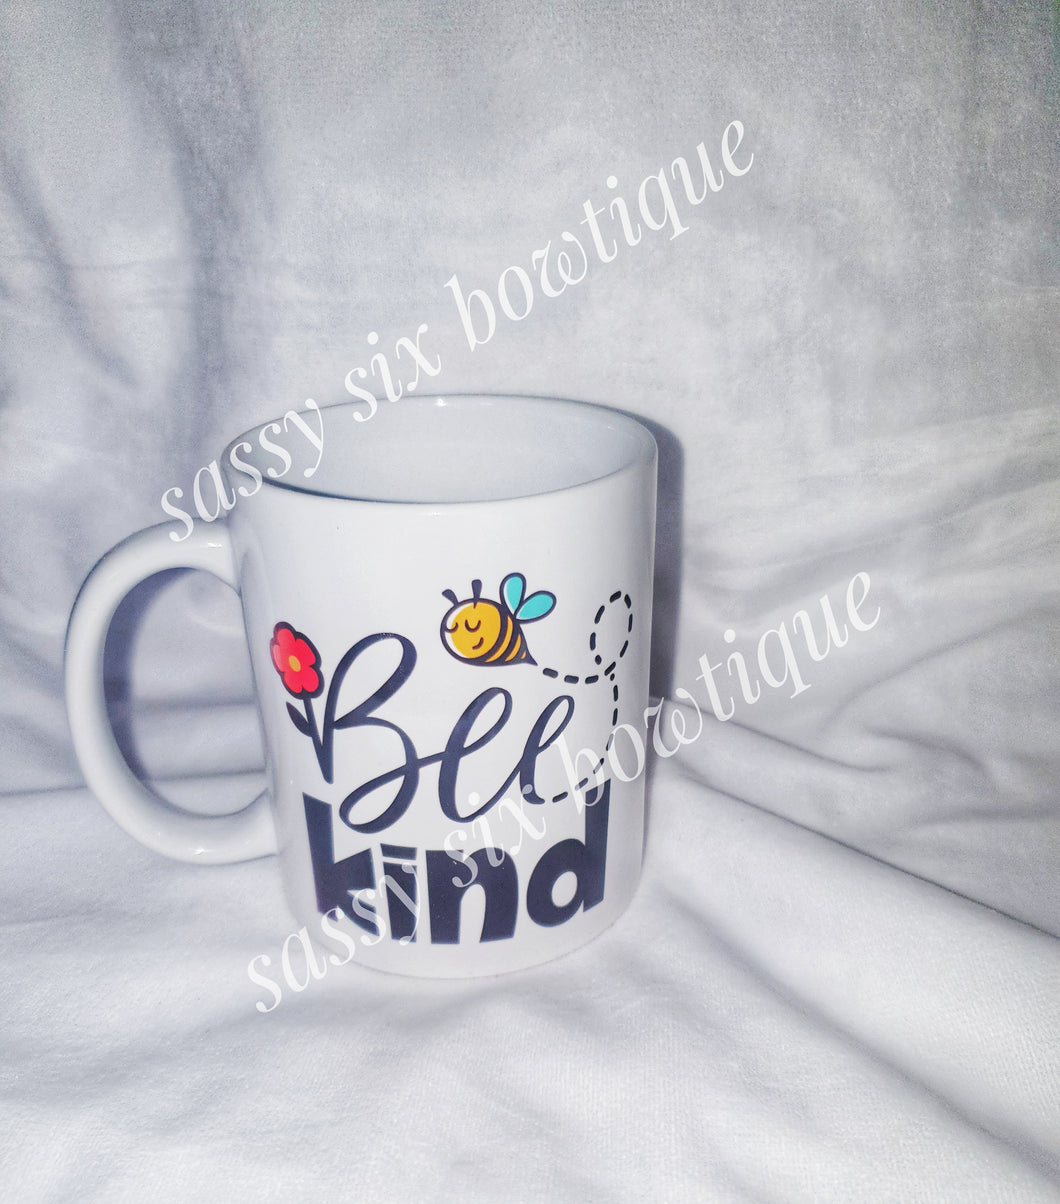 Bee kind coffee cup